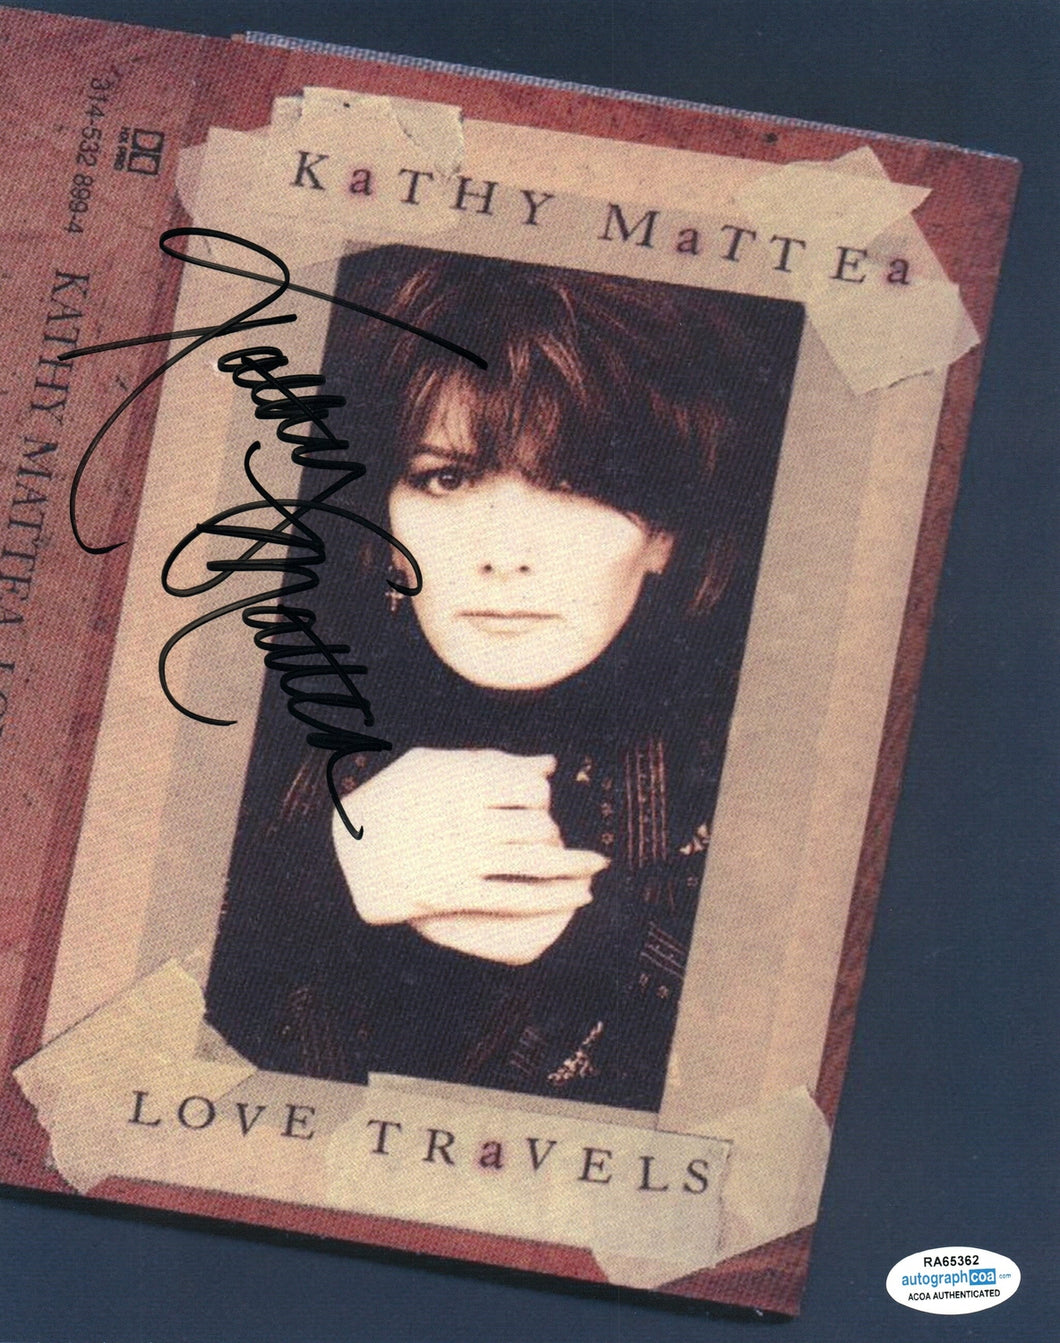 Kathy Mattea Autographed Signed 8x10 Love Travels Photo